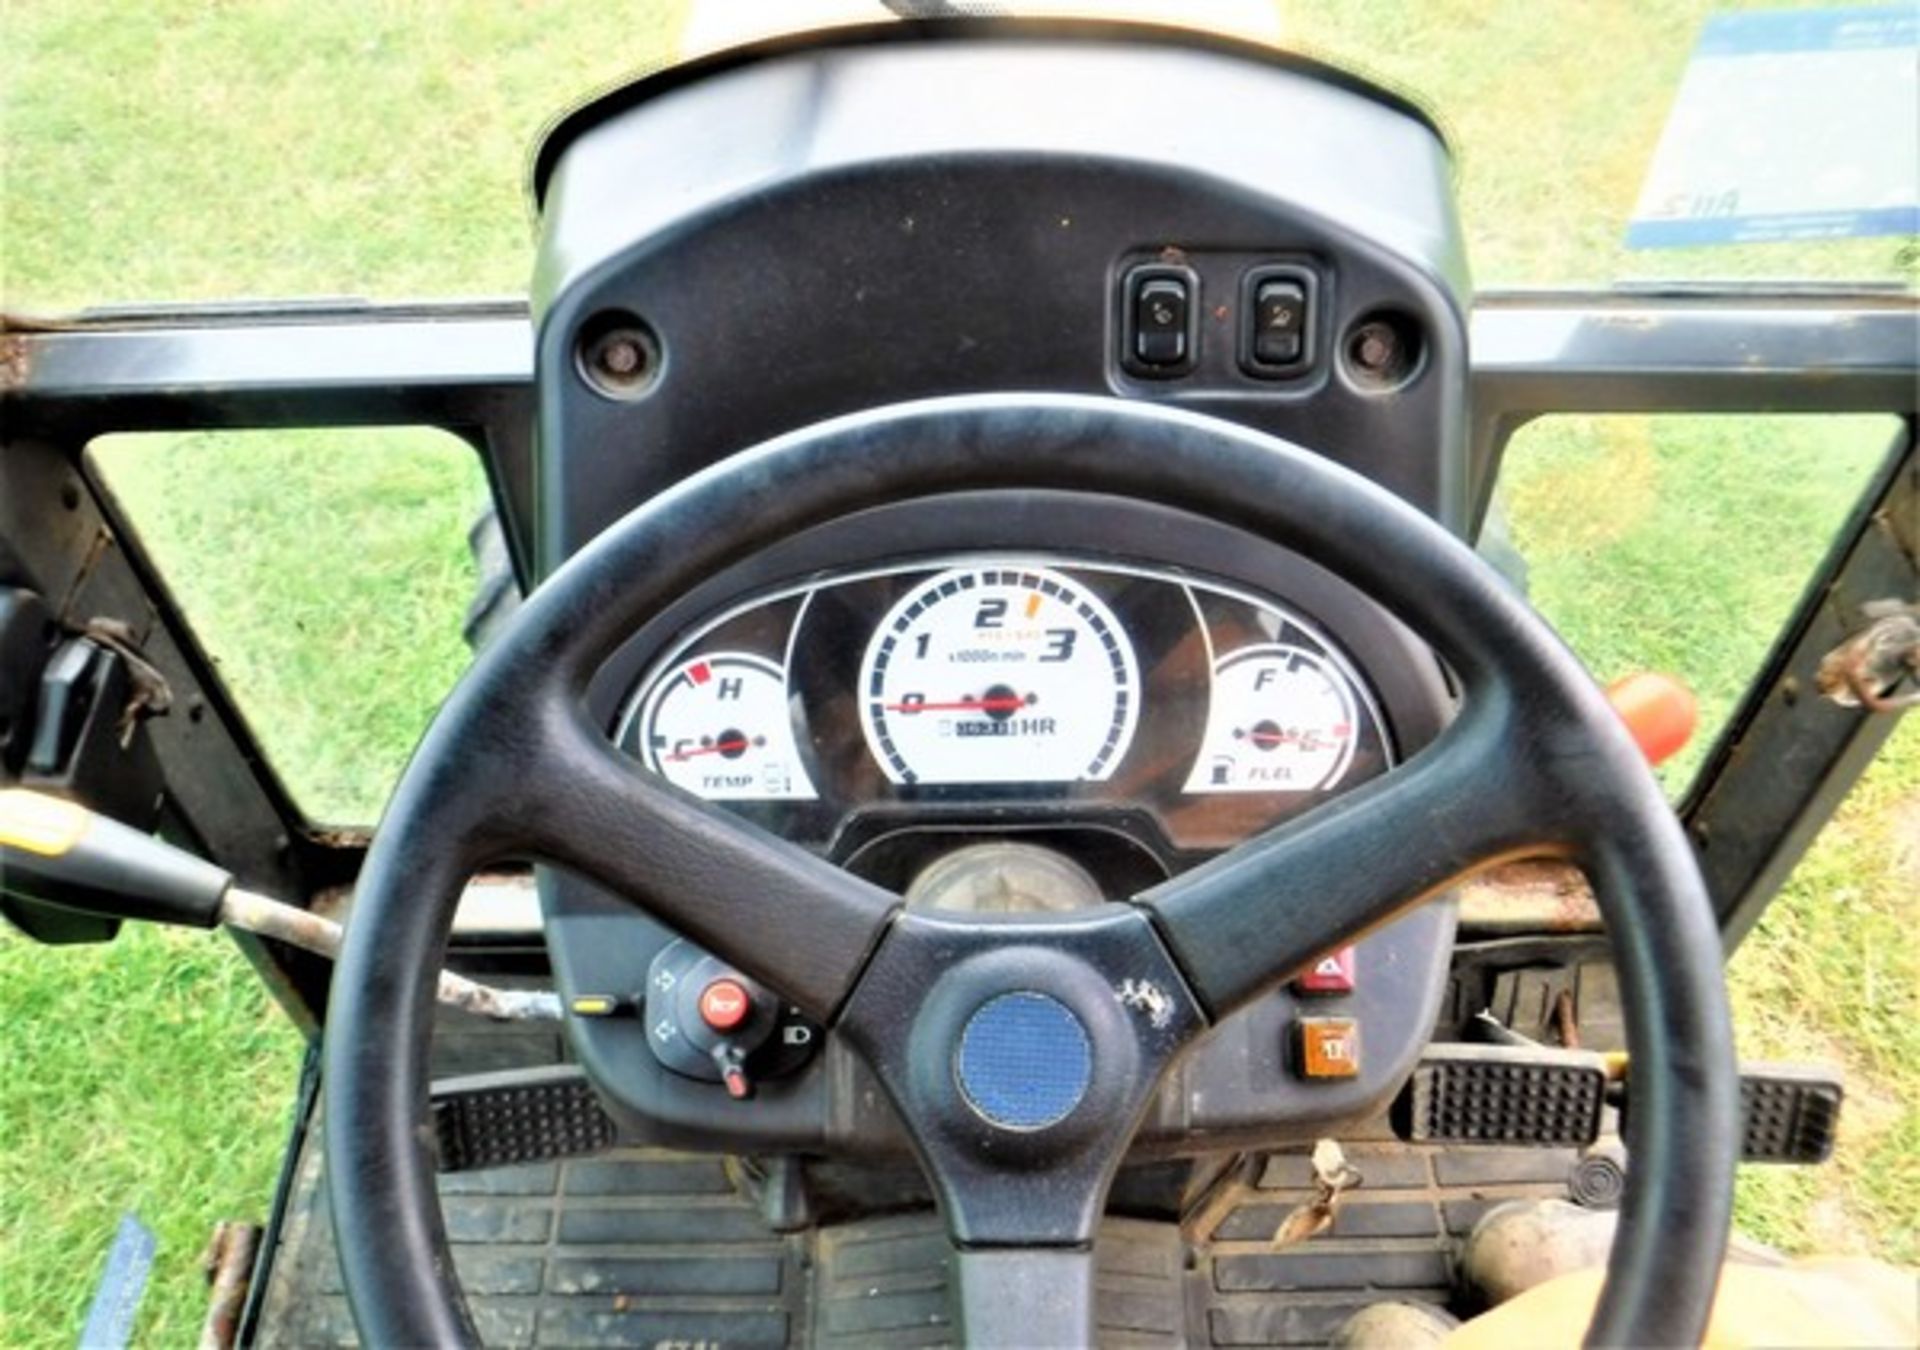 2008 KUBOTA B5 mini tractor c/w mounted PTO driven D W Tomlin salt spreader Reg No SN58 EVJ. ID No - - Image 7 of 19